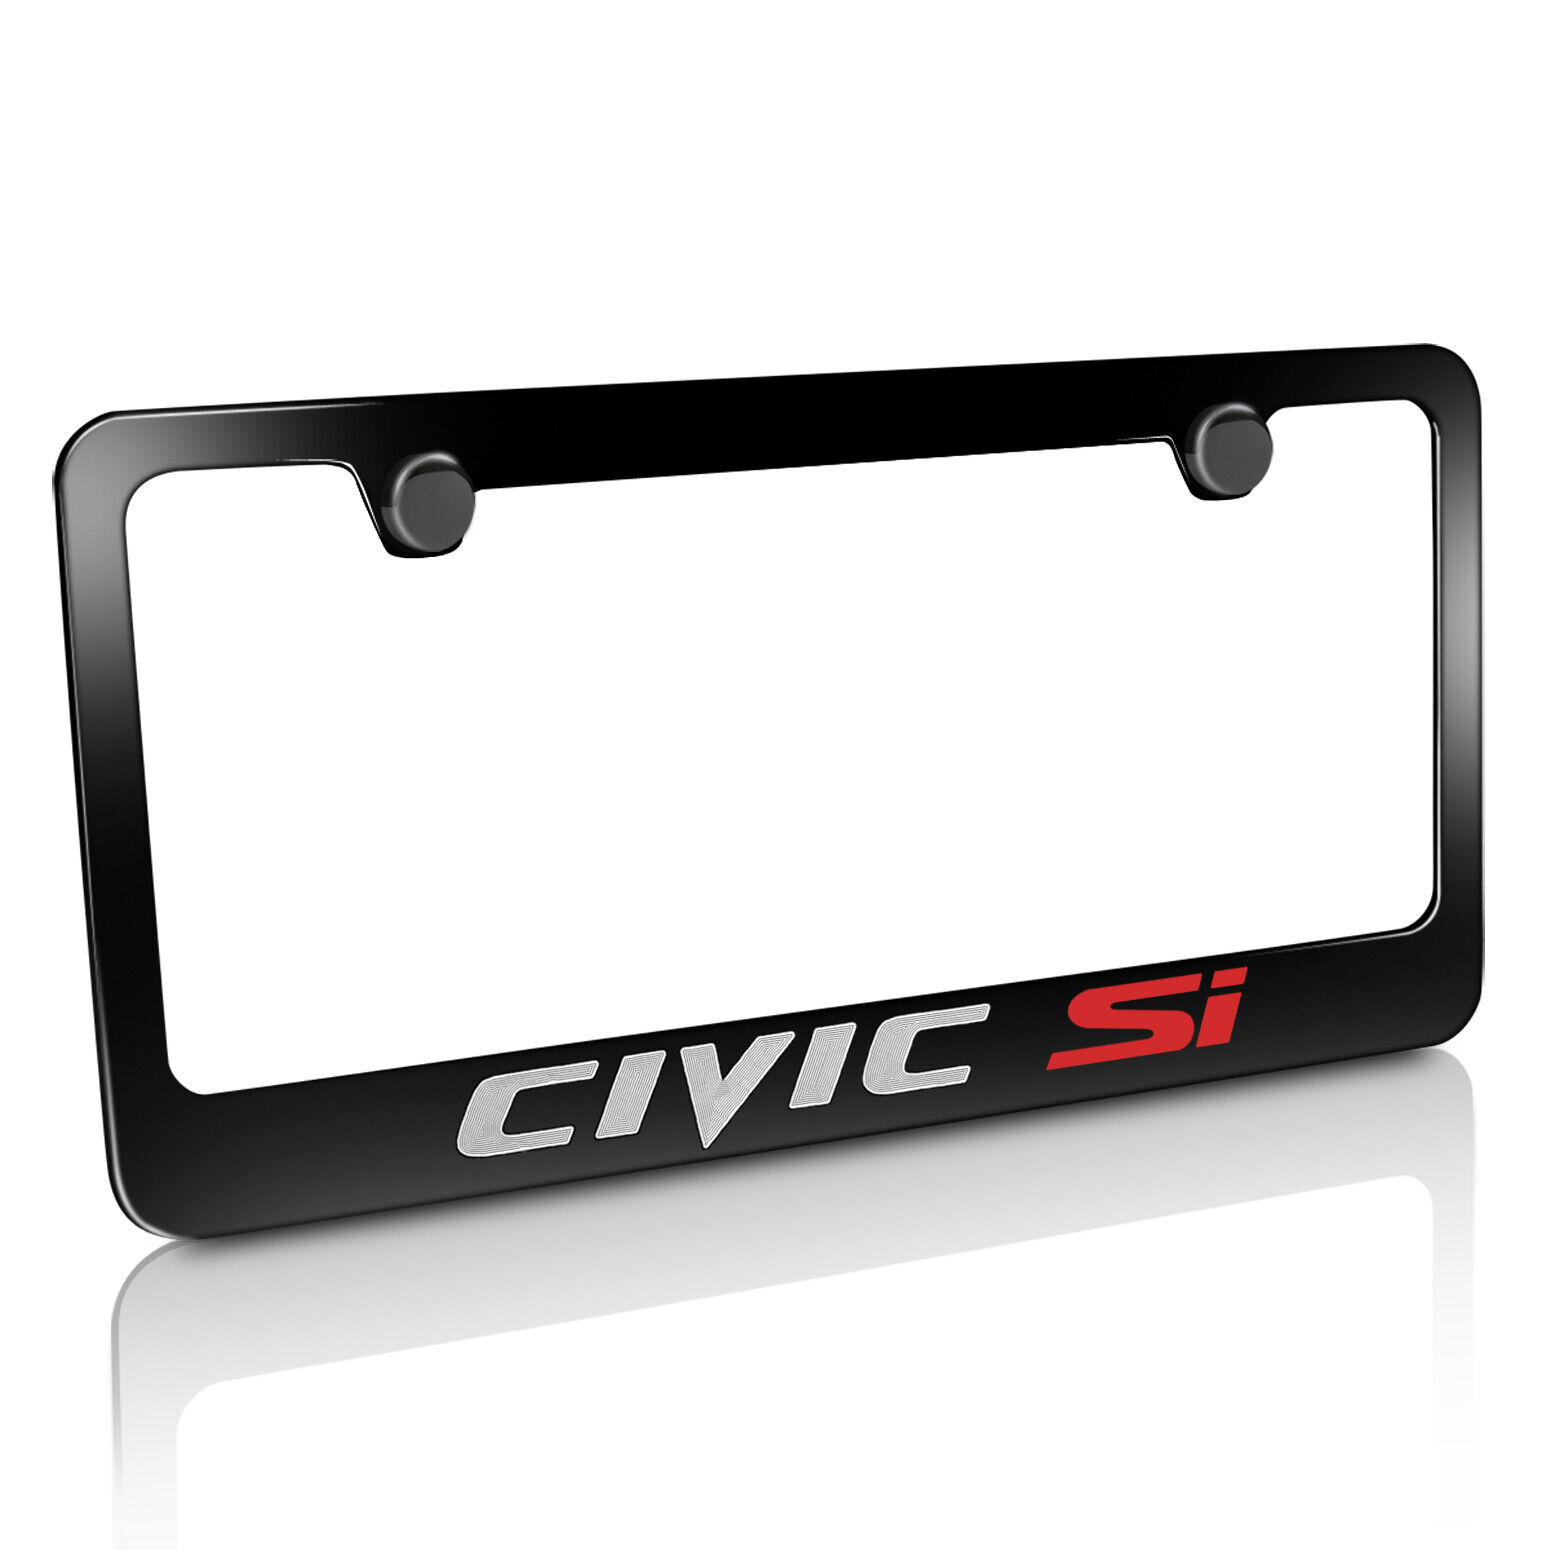 Honda Civic Si Engraved Black Powder Finish Metal License Plate Frame